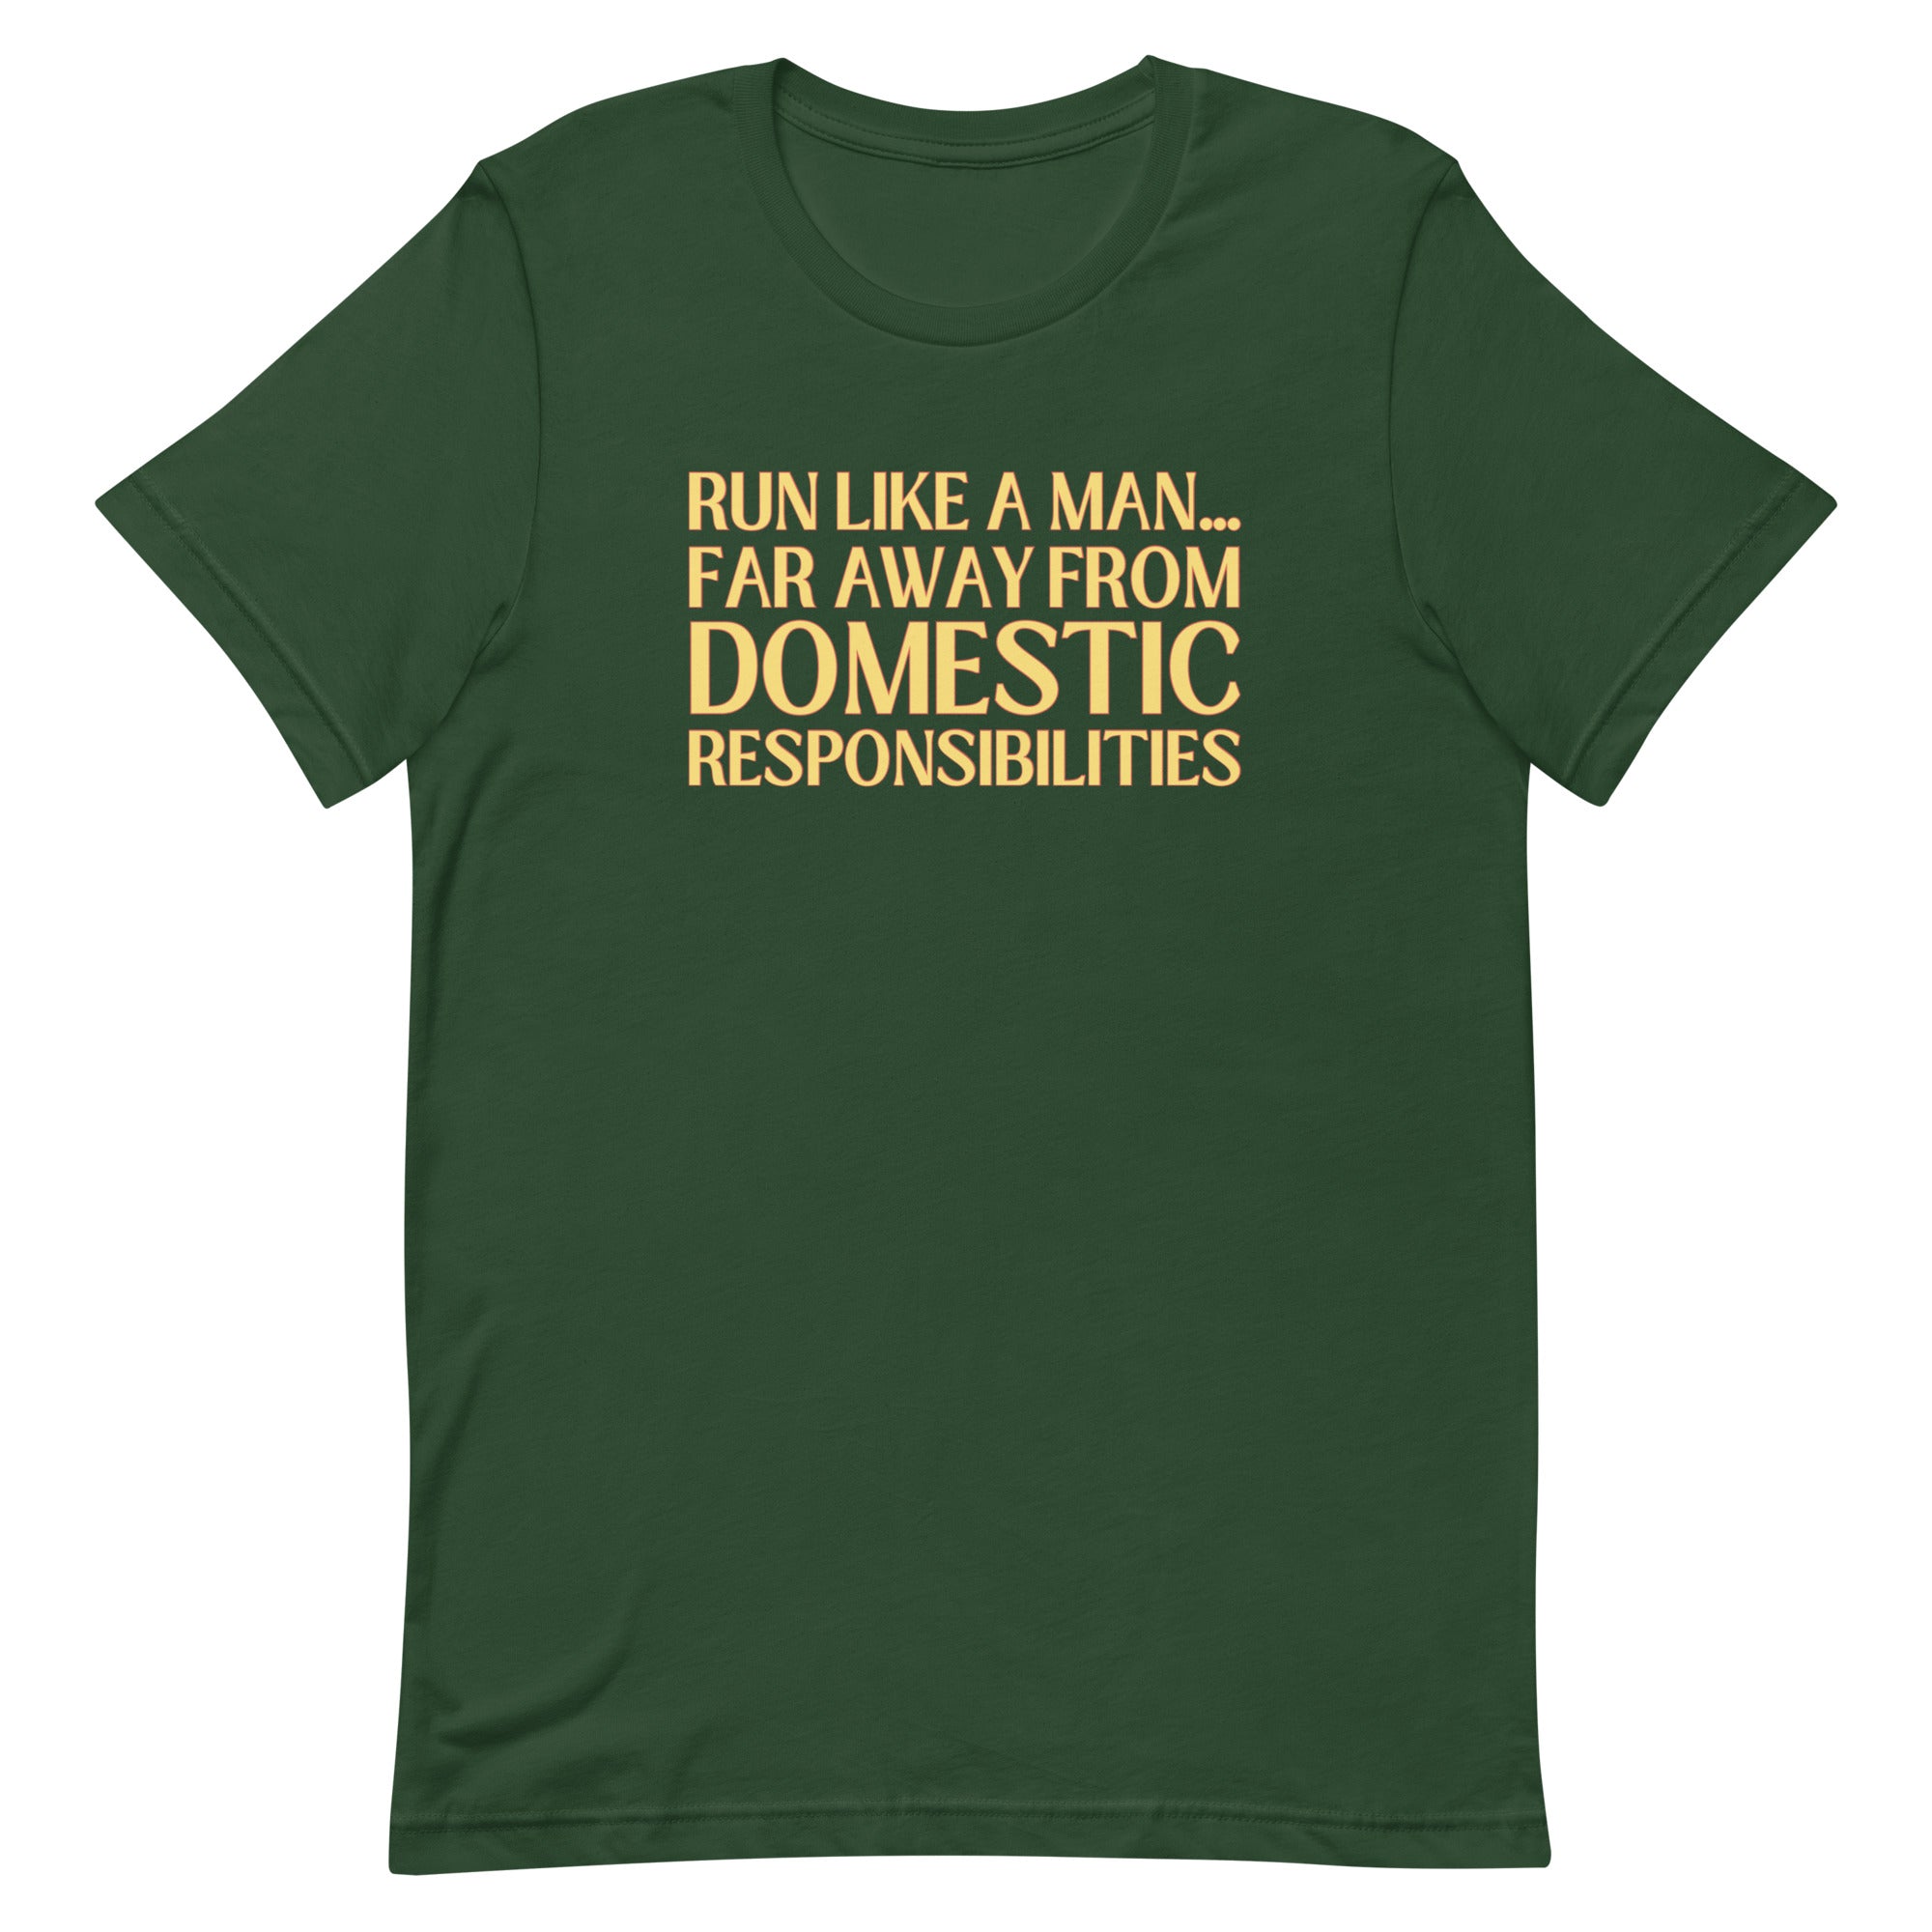 Run Like A Man Unisex Feminist t-shirt - Shop Women’s Rights T-shirts - Feminist Trash Store - Forest